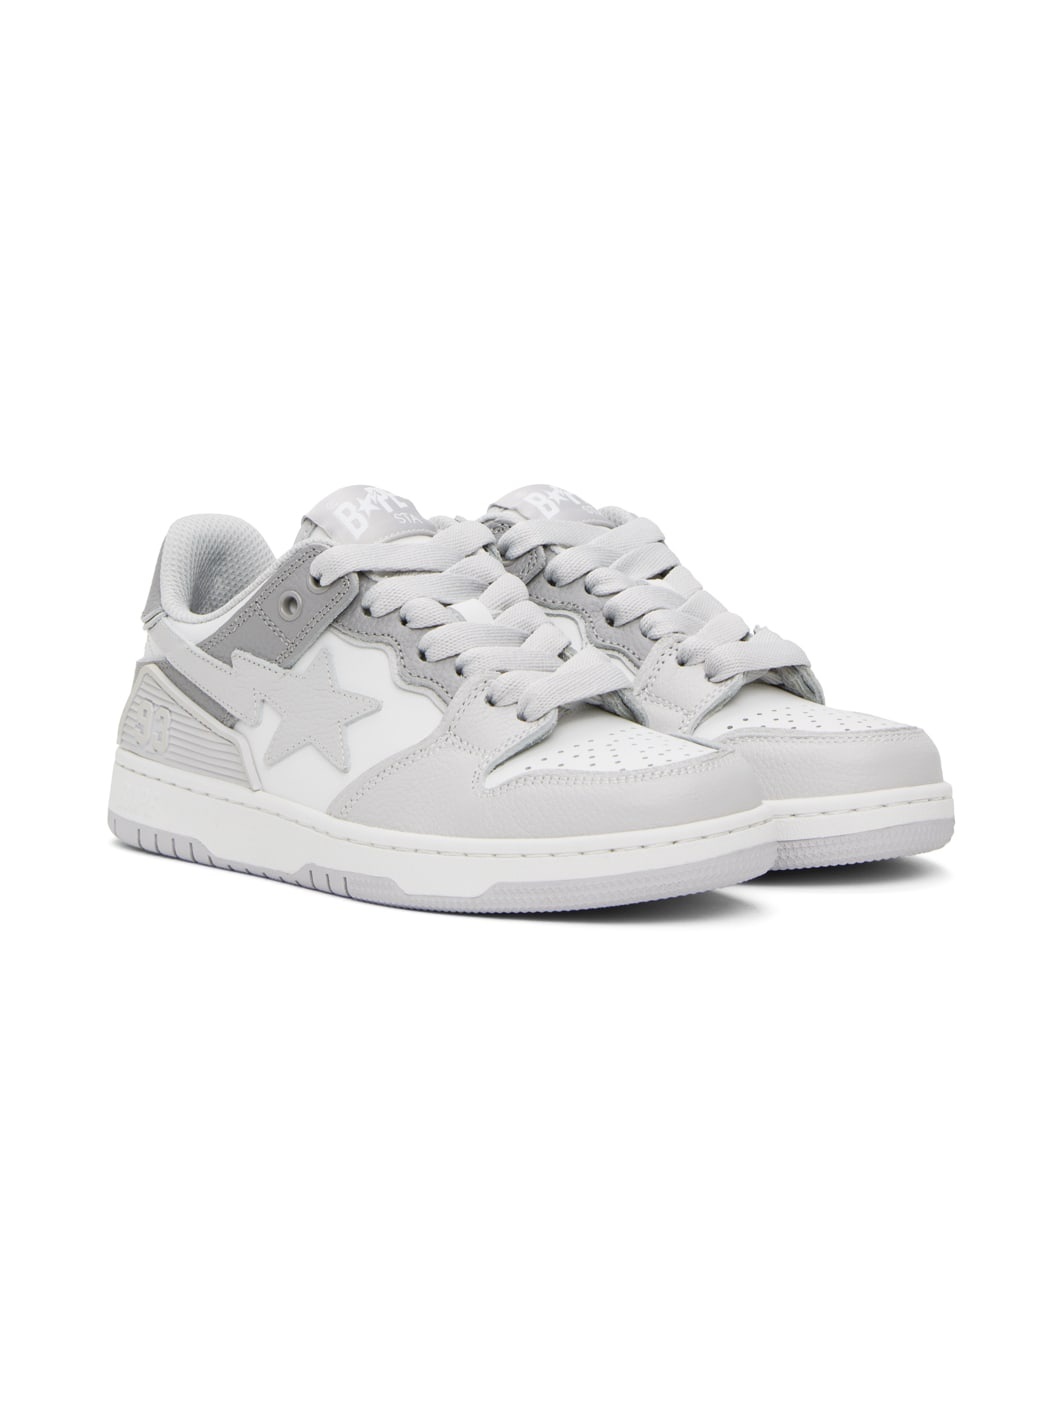 White & Gray Sk8 Sta #5 Sneakers - 4